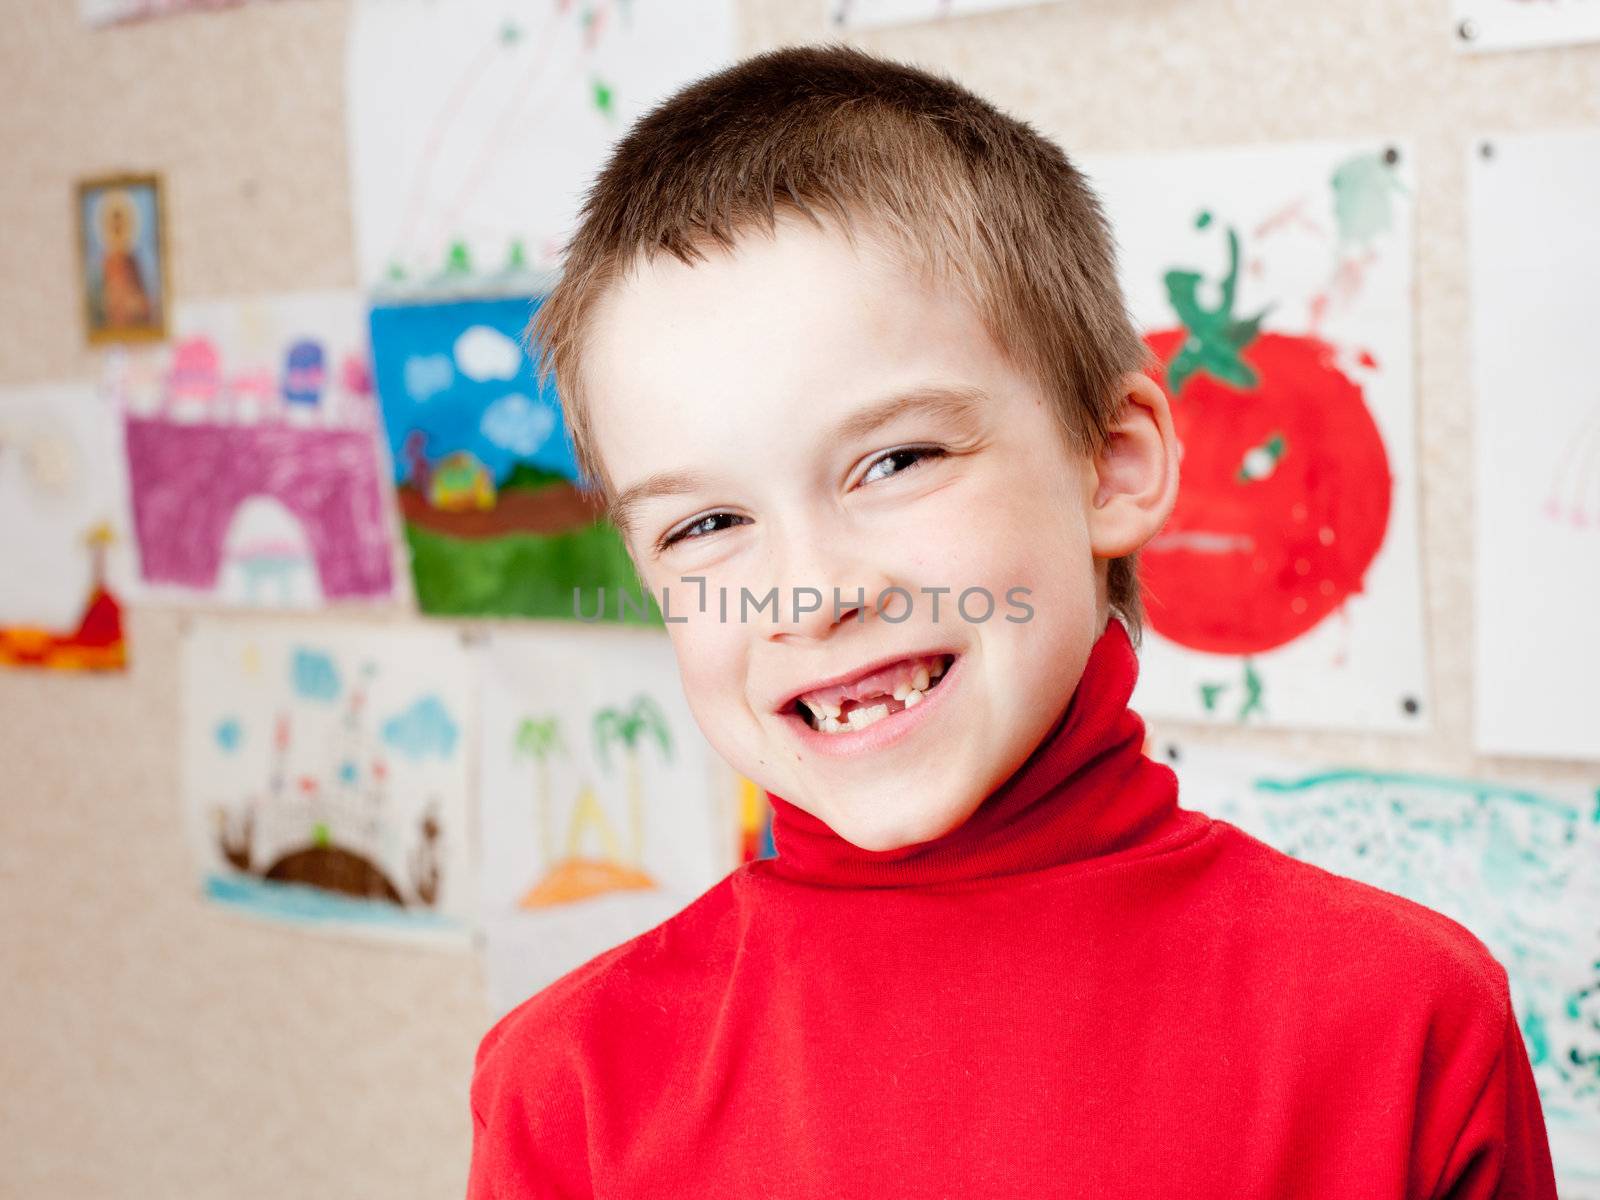 Smiling boy shows lost deciduous teeth